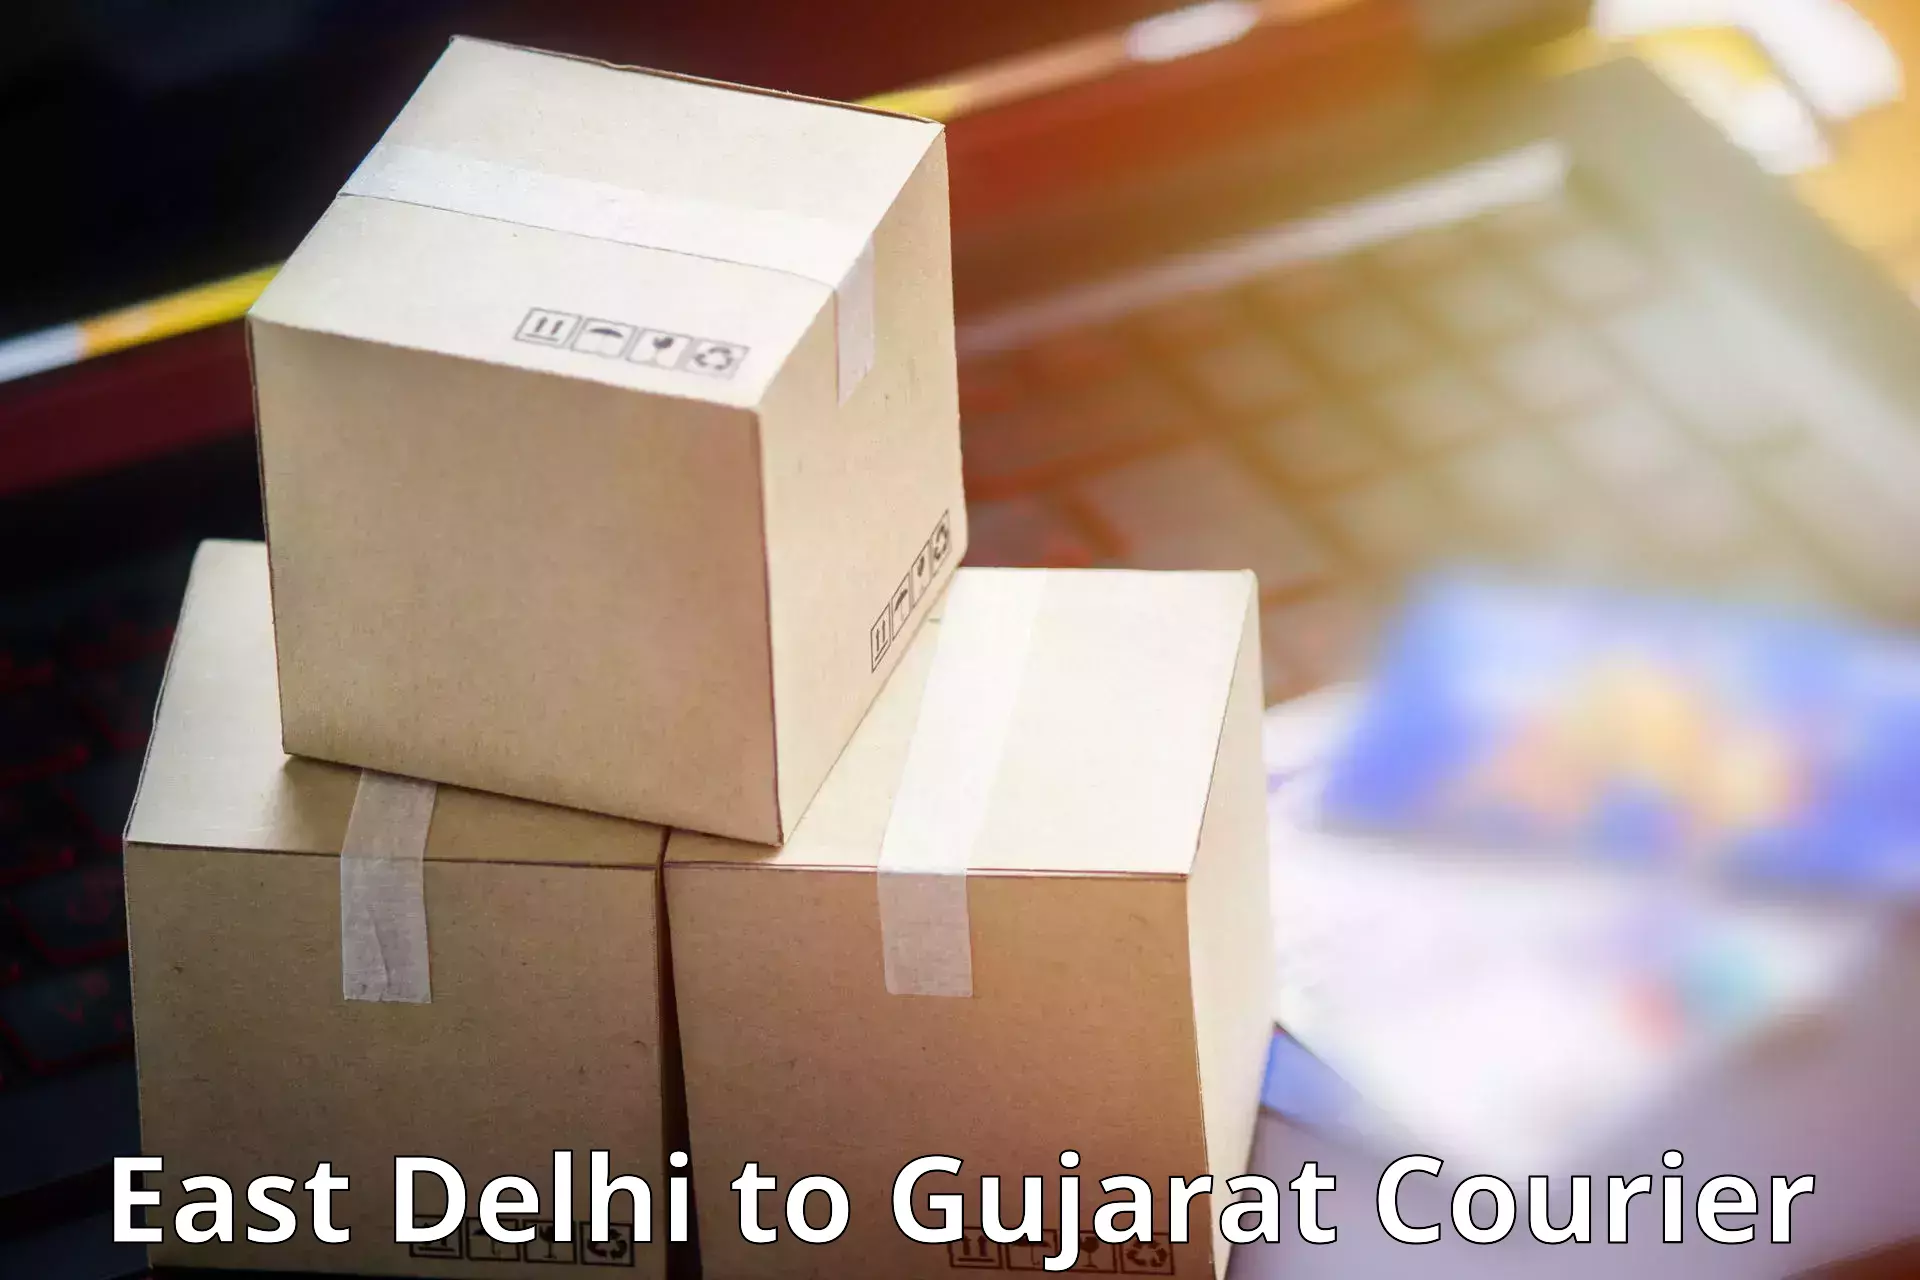 Courier service partnerships East Delhi to Vatadara